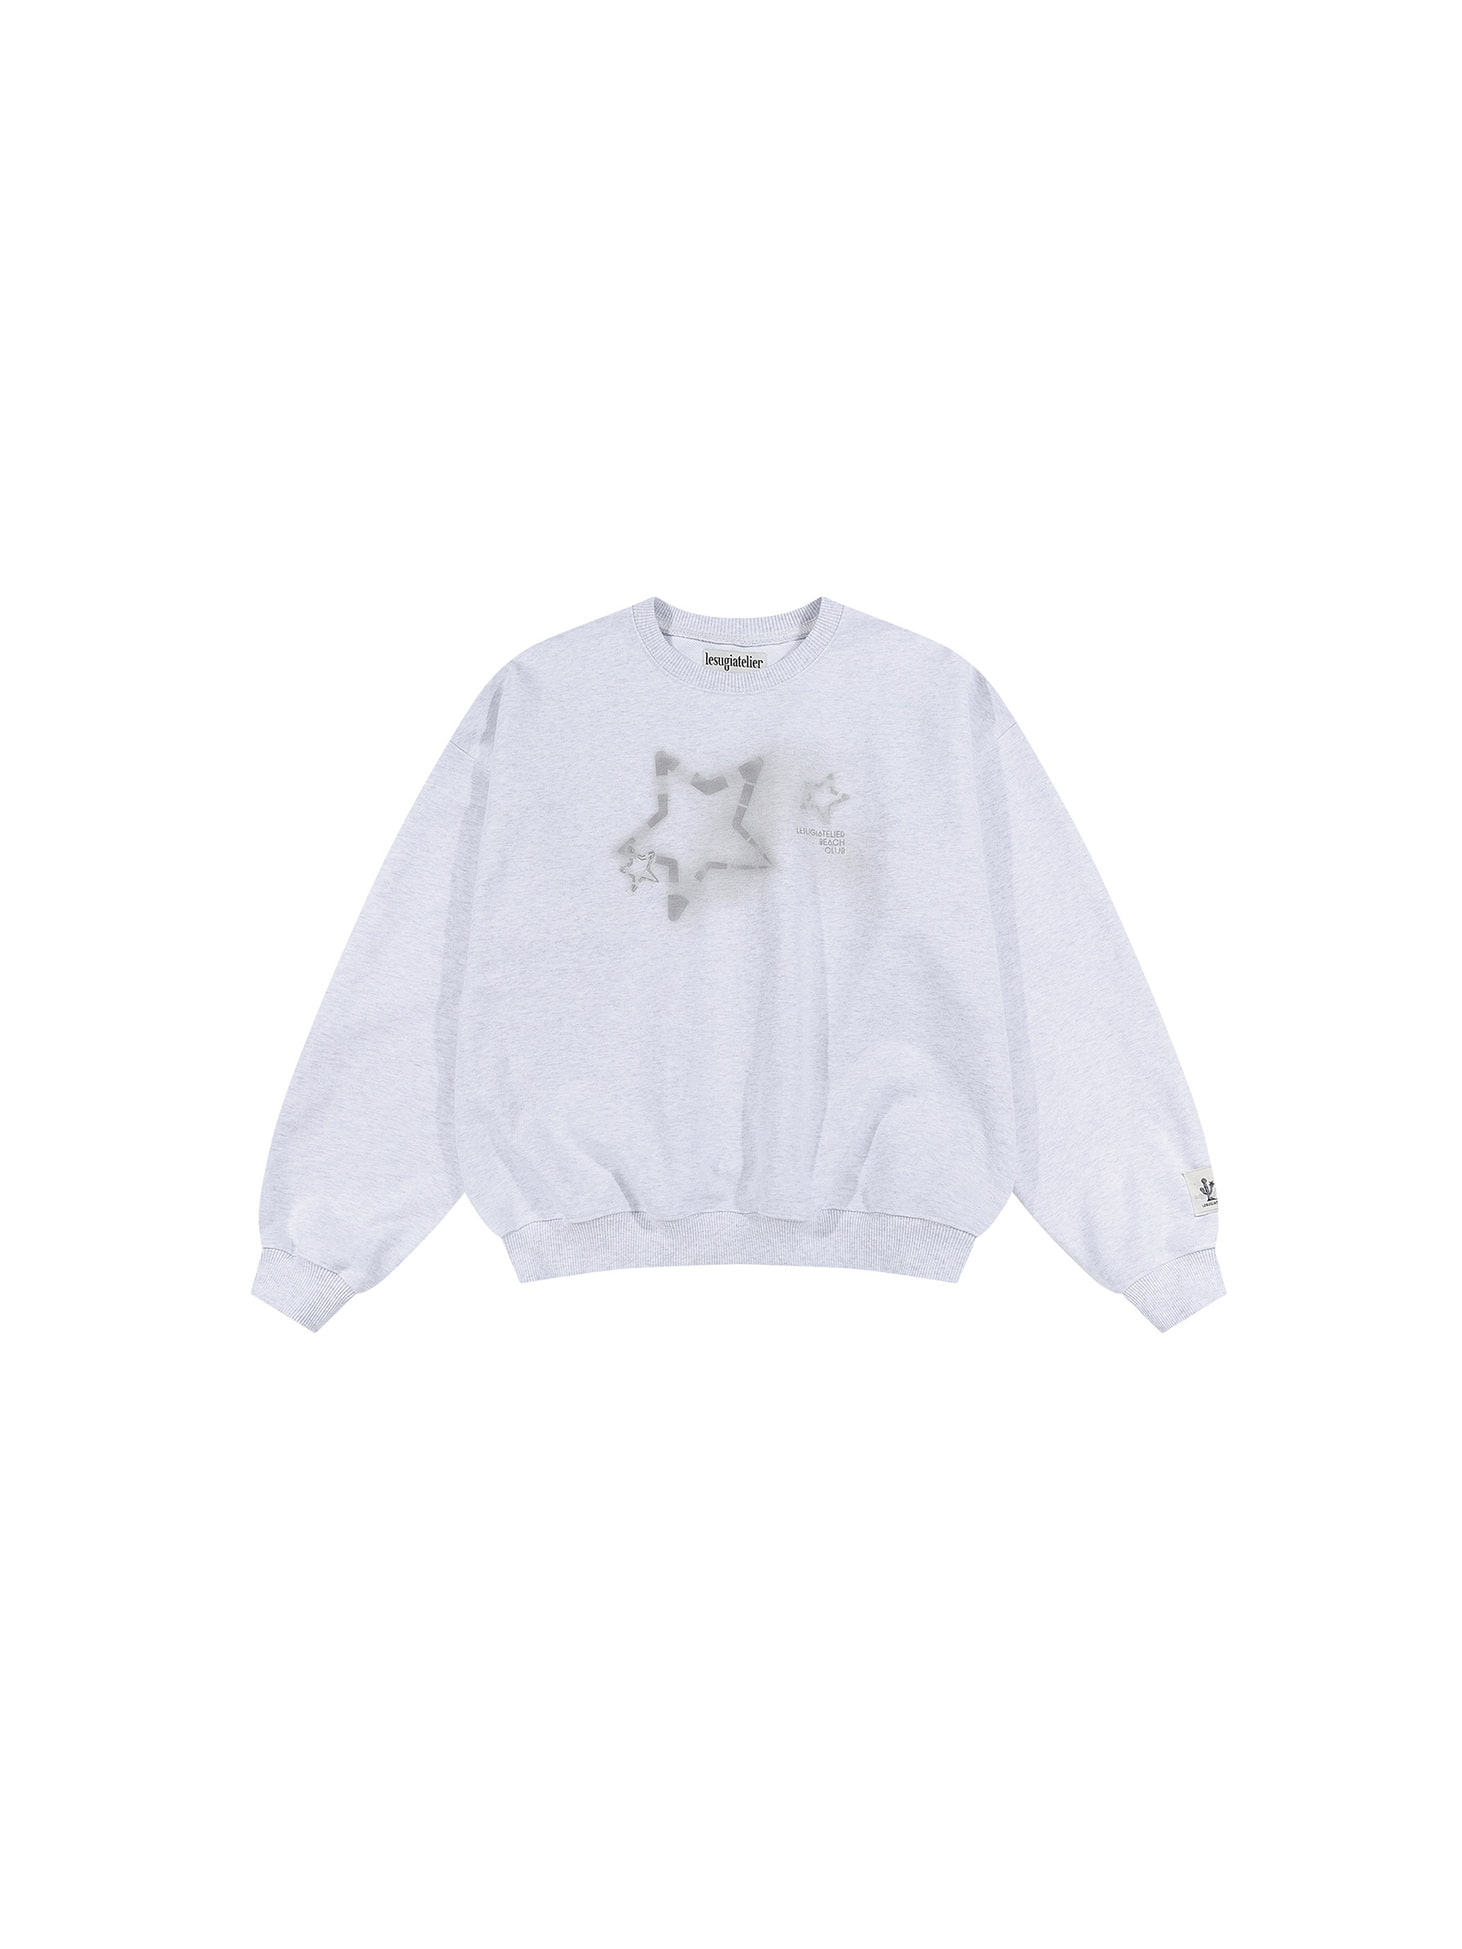 Sugi star sweatshirt / Grey